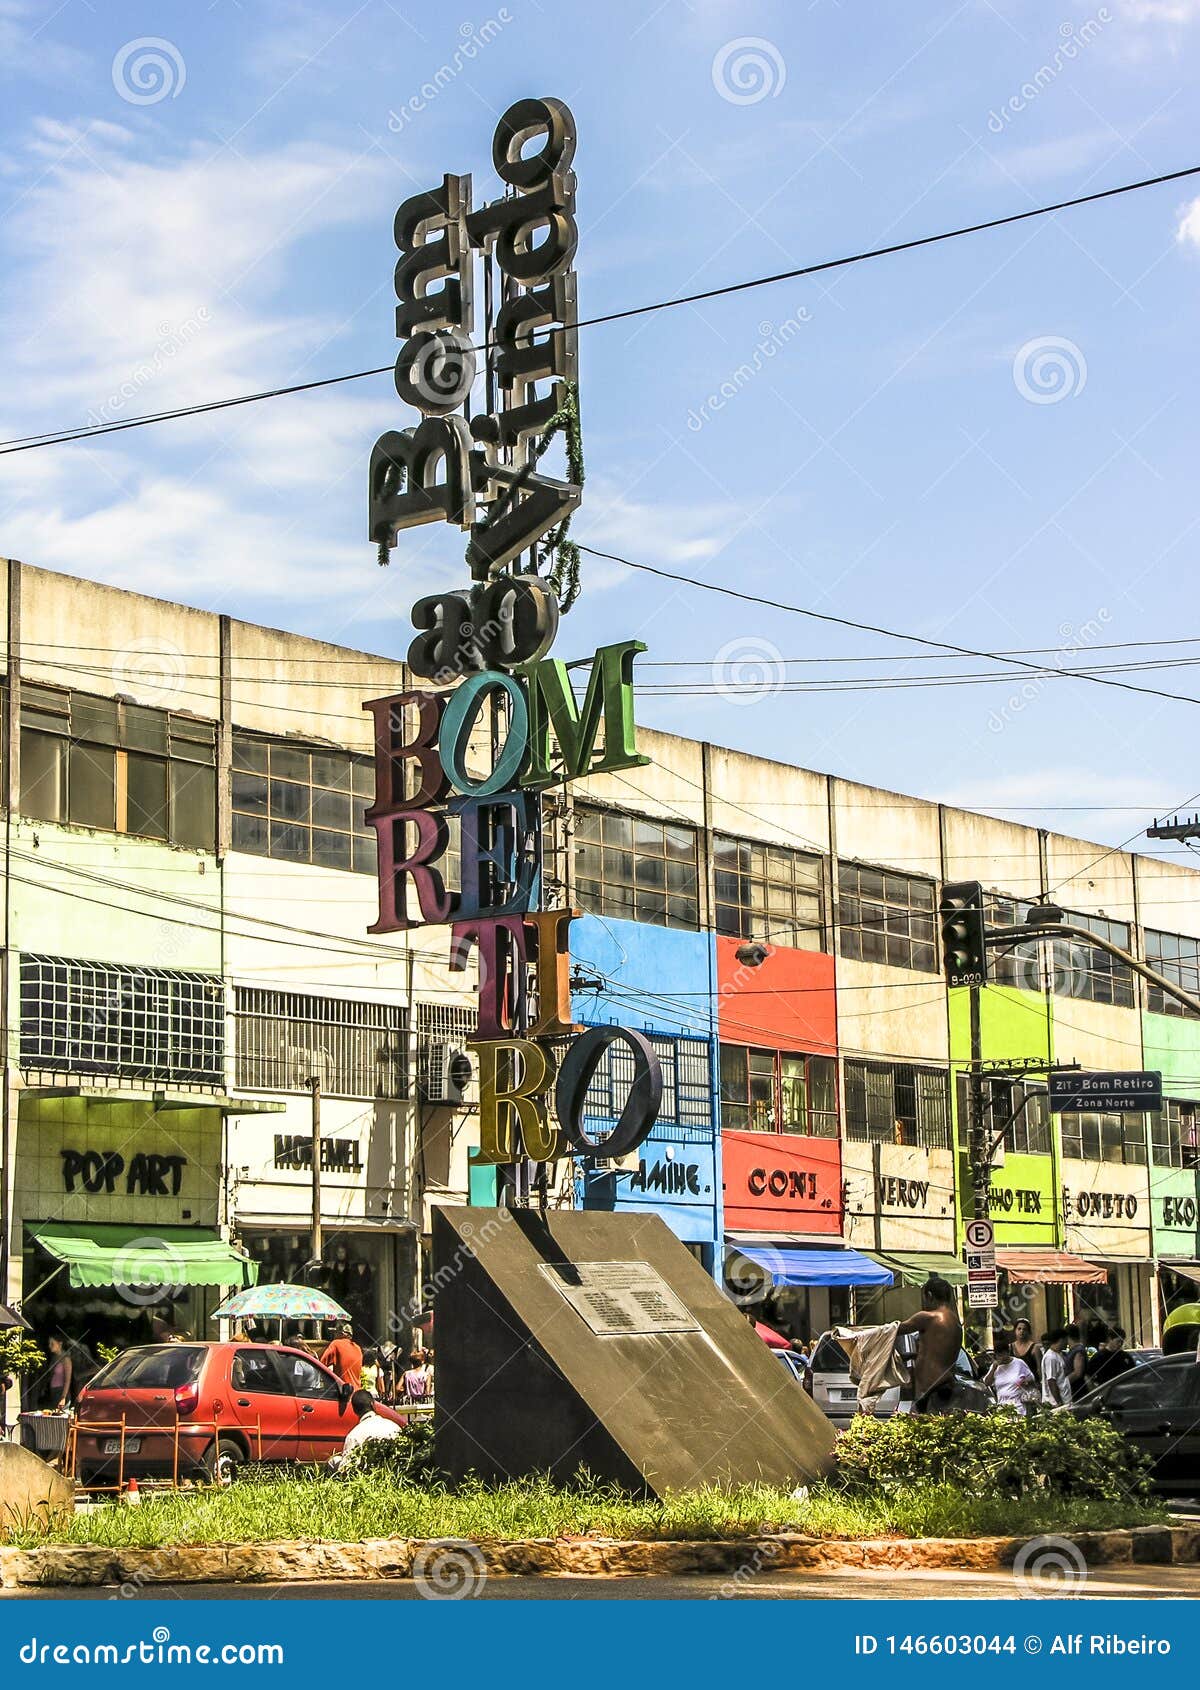 Totem Welcome of Bom Retiro, on Entrance of Neighborhood Editorial Stock  Image - Image of marketplace, famous: 146603044